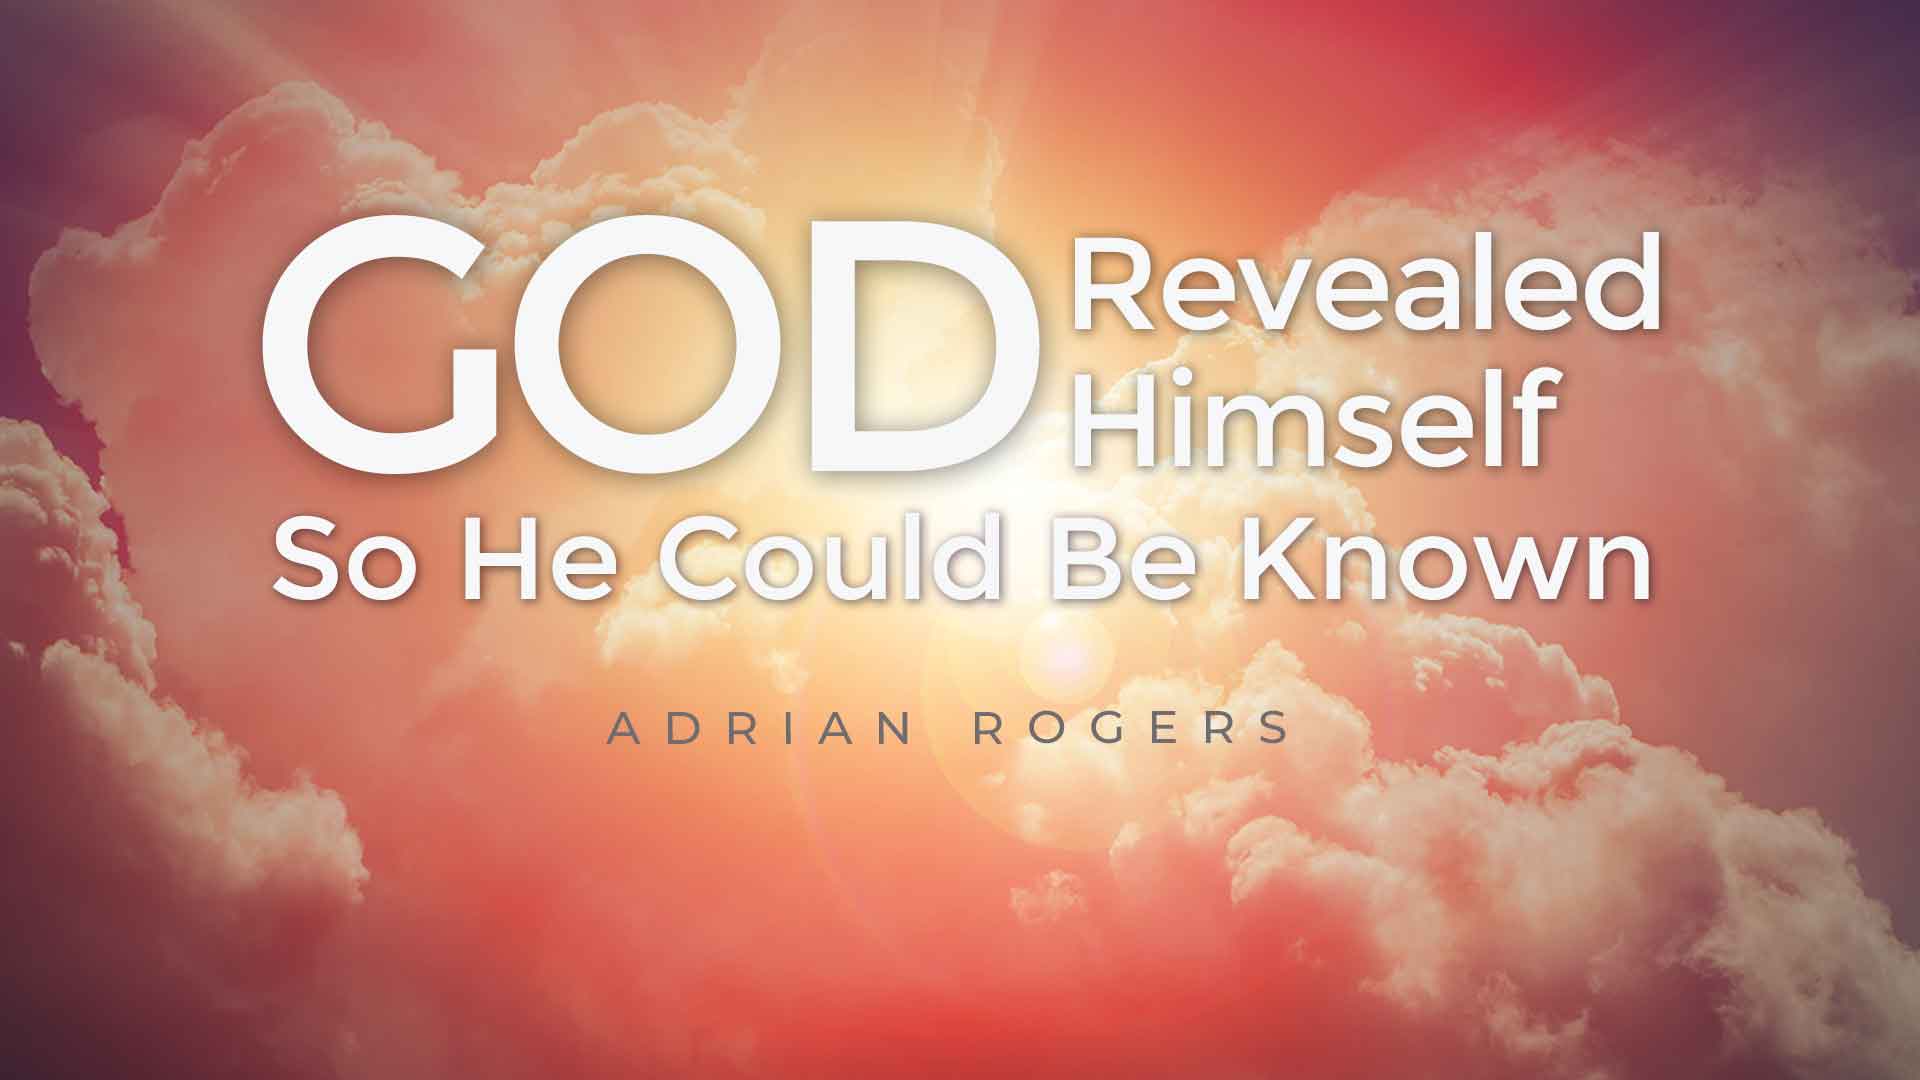 God Revealed Himself Be Known 1920x1080